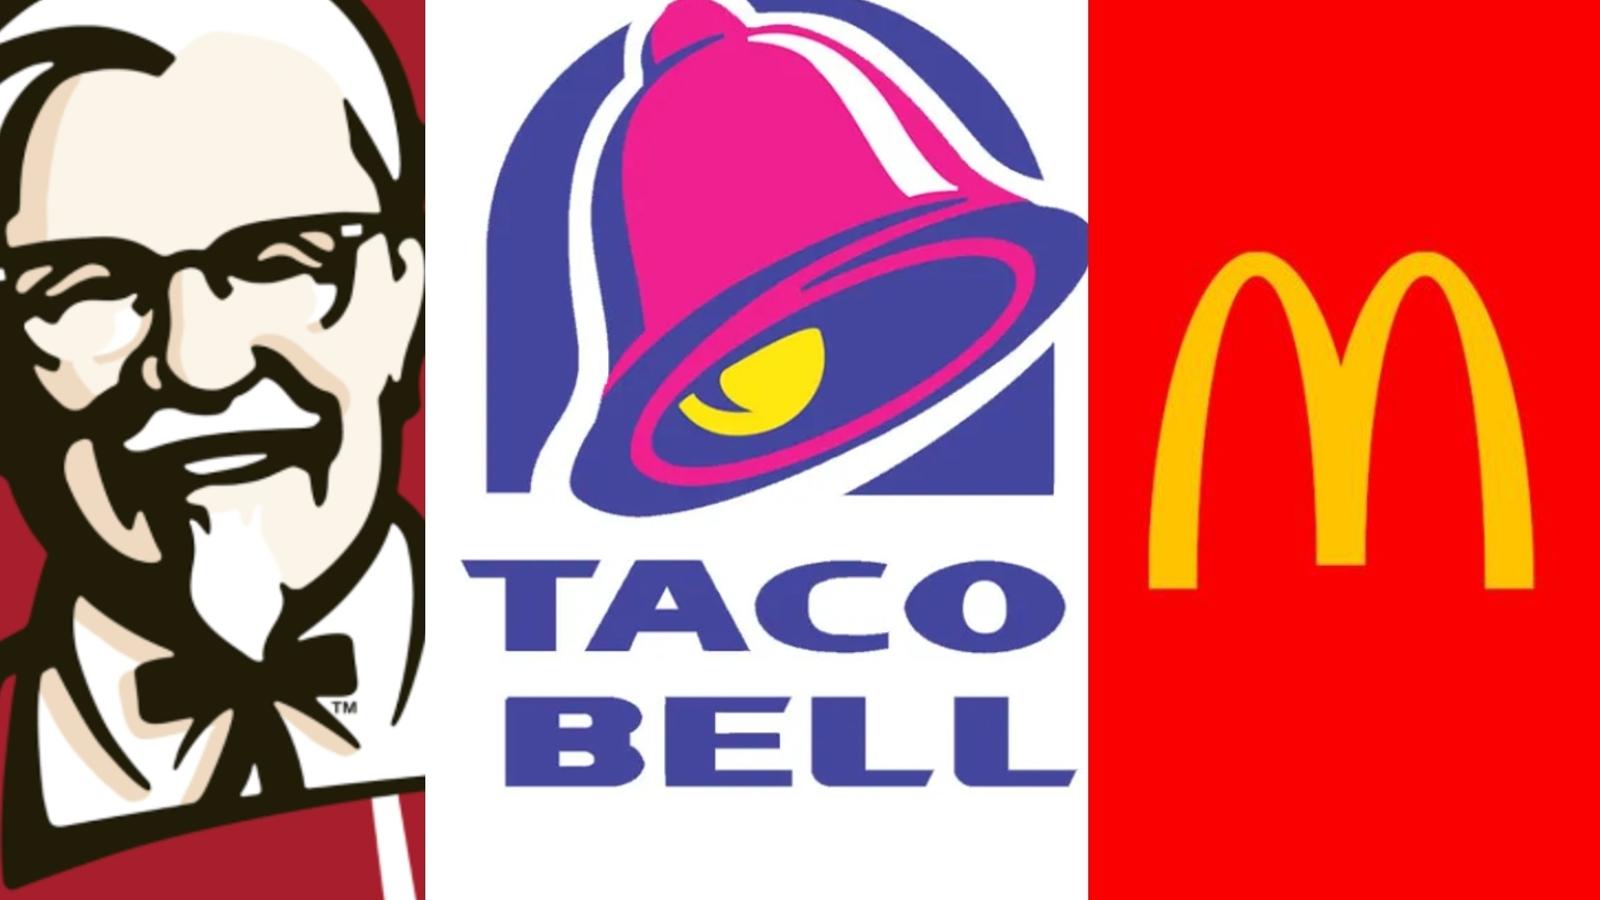 KFC Taco Bell McDonald's logo